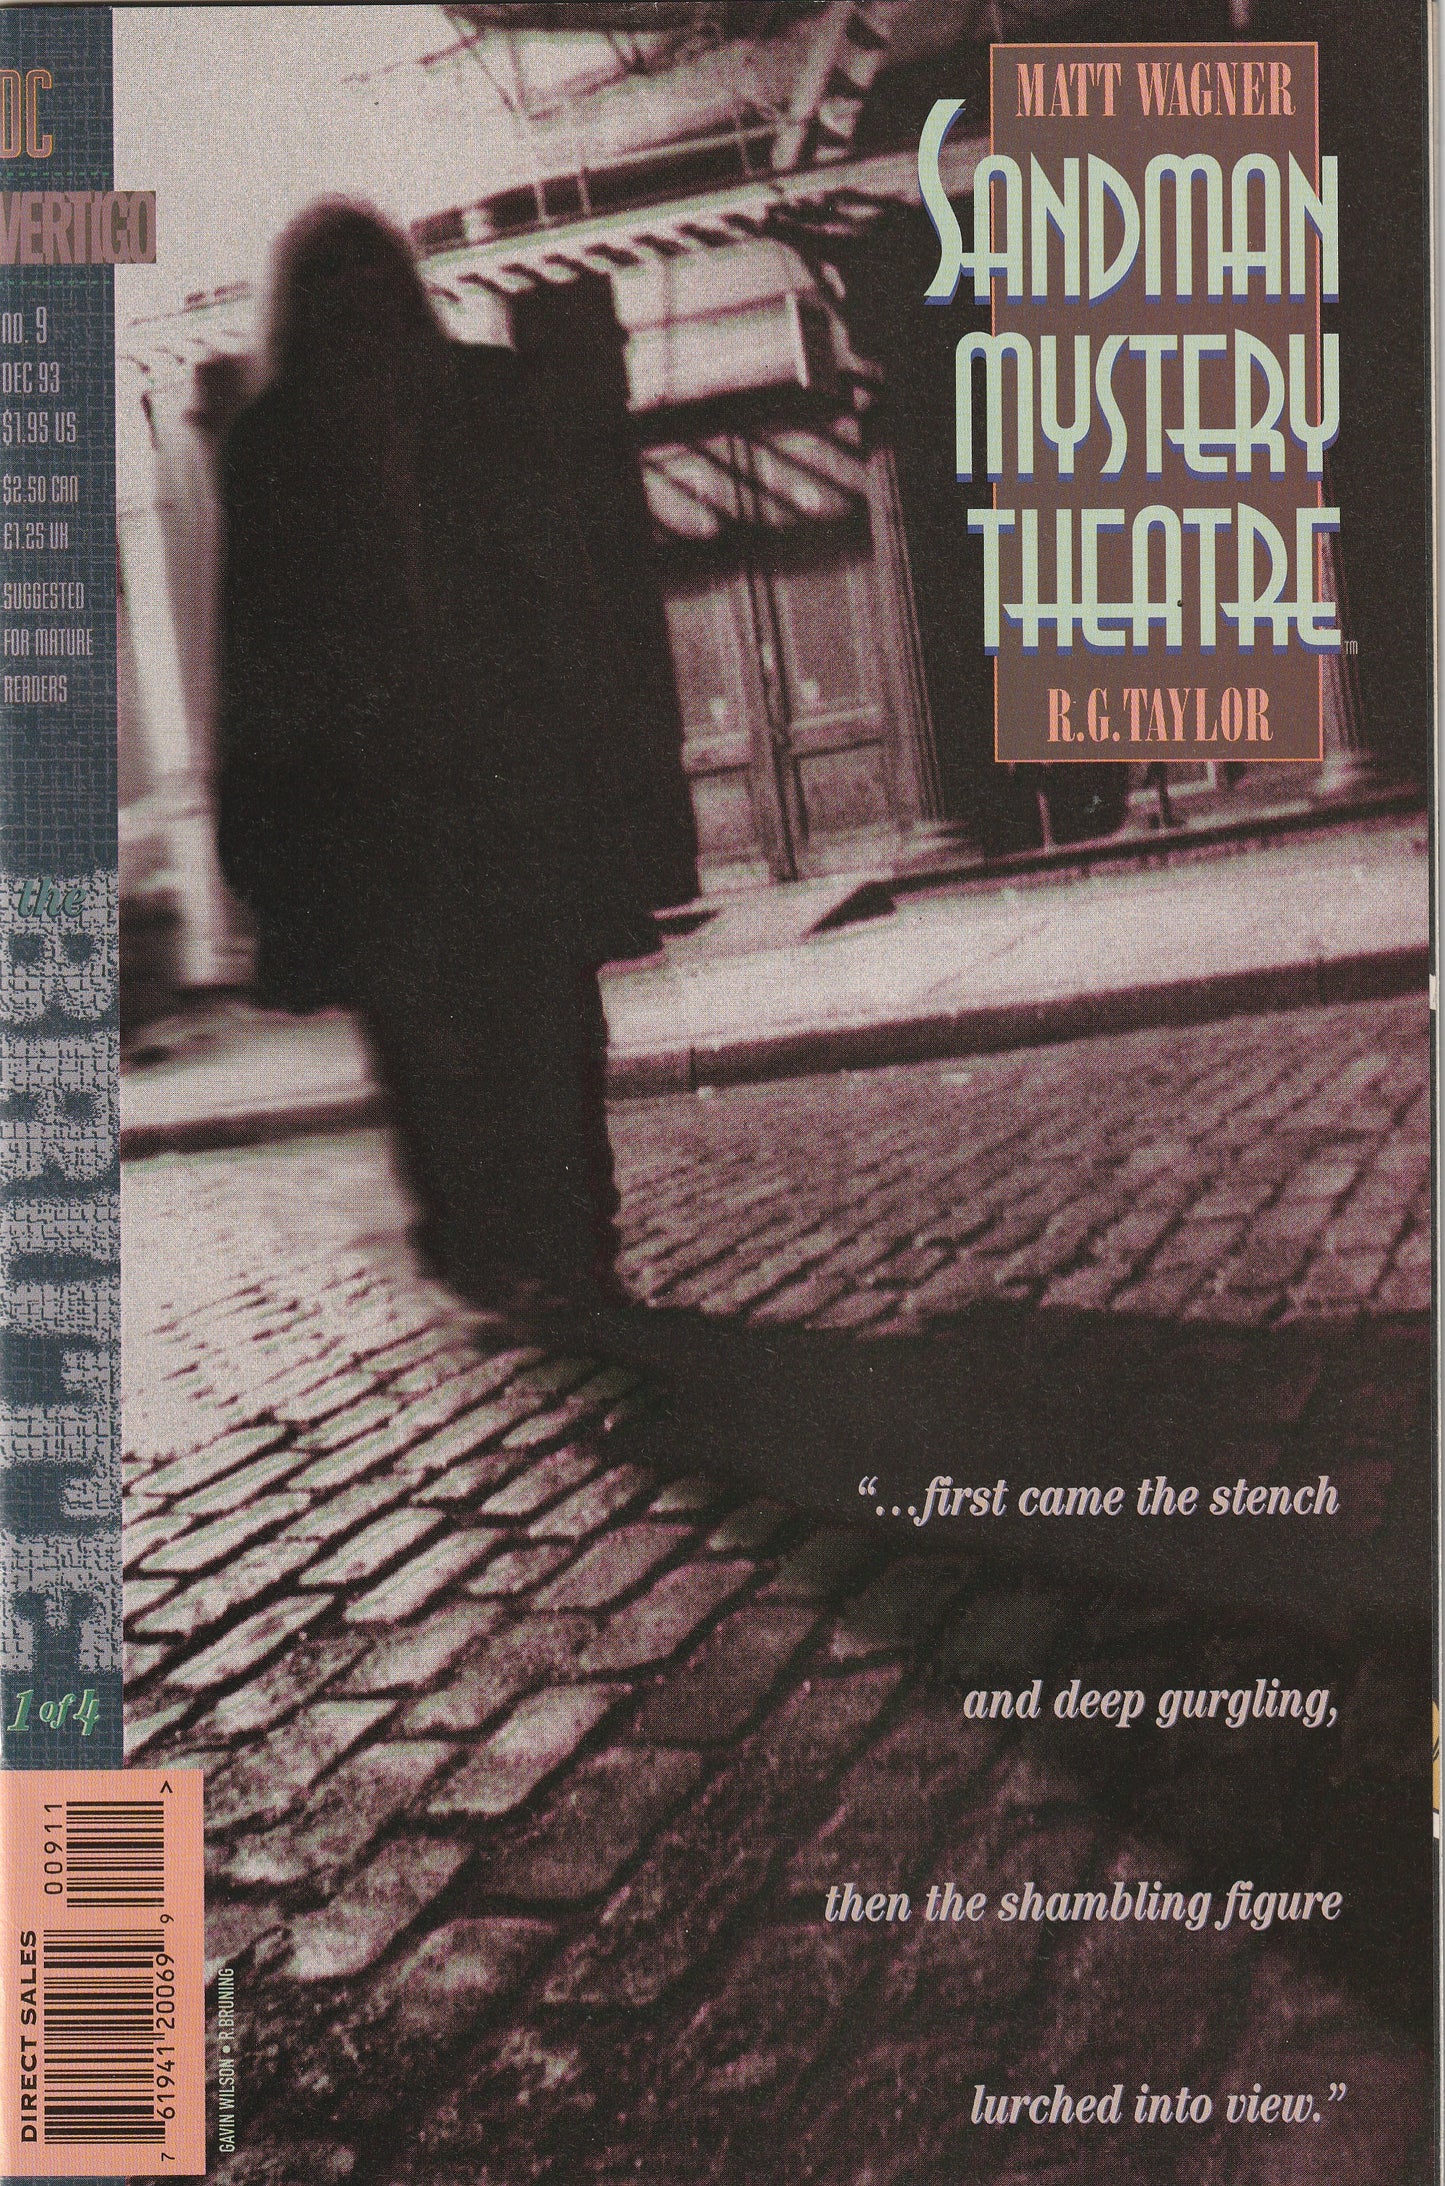 Sandman Mystery Theatre #9 (1993) - Matt Wagner